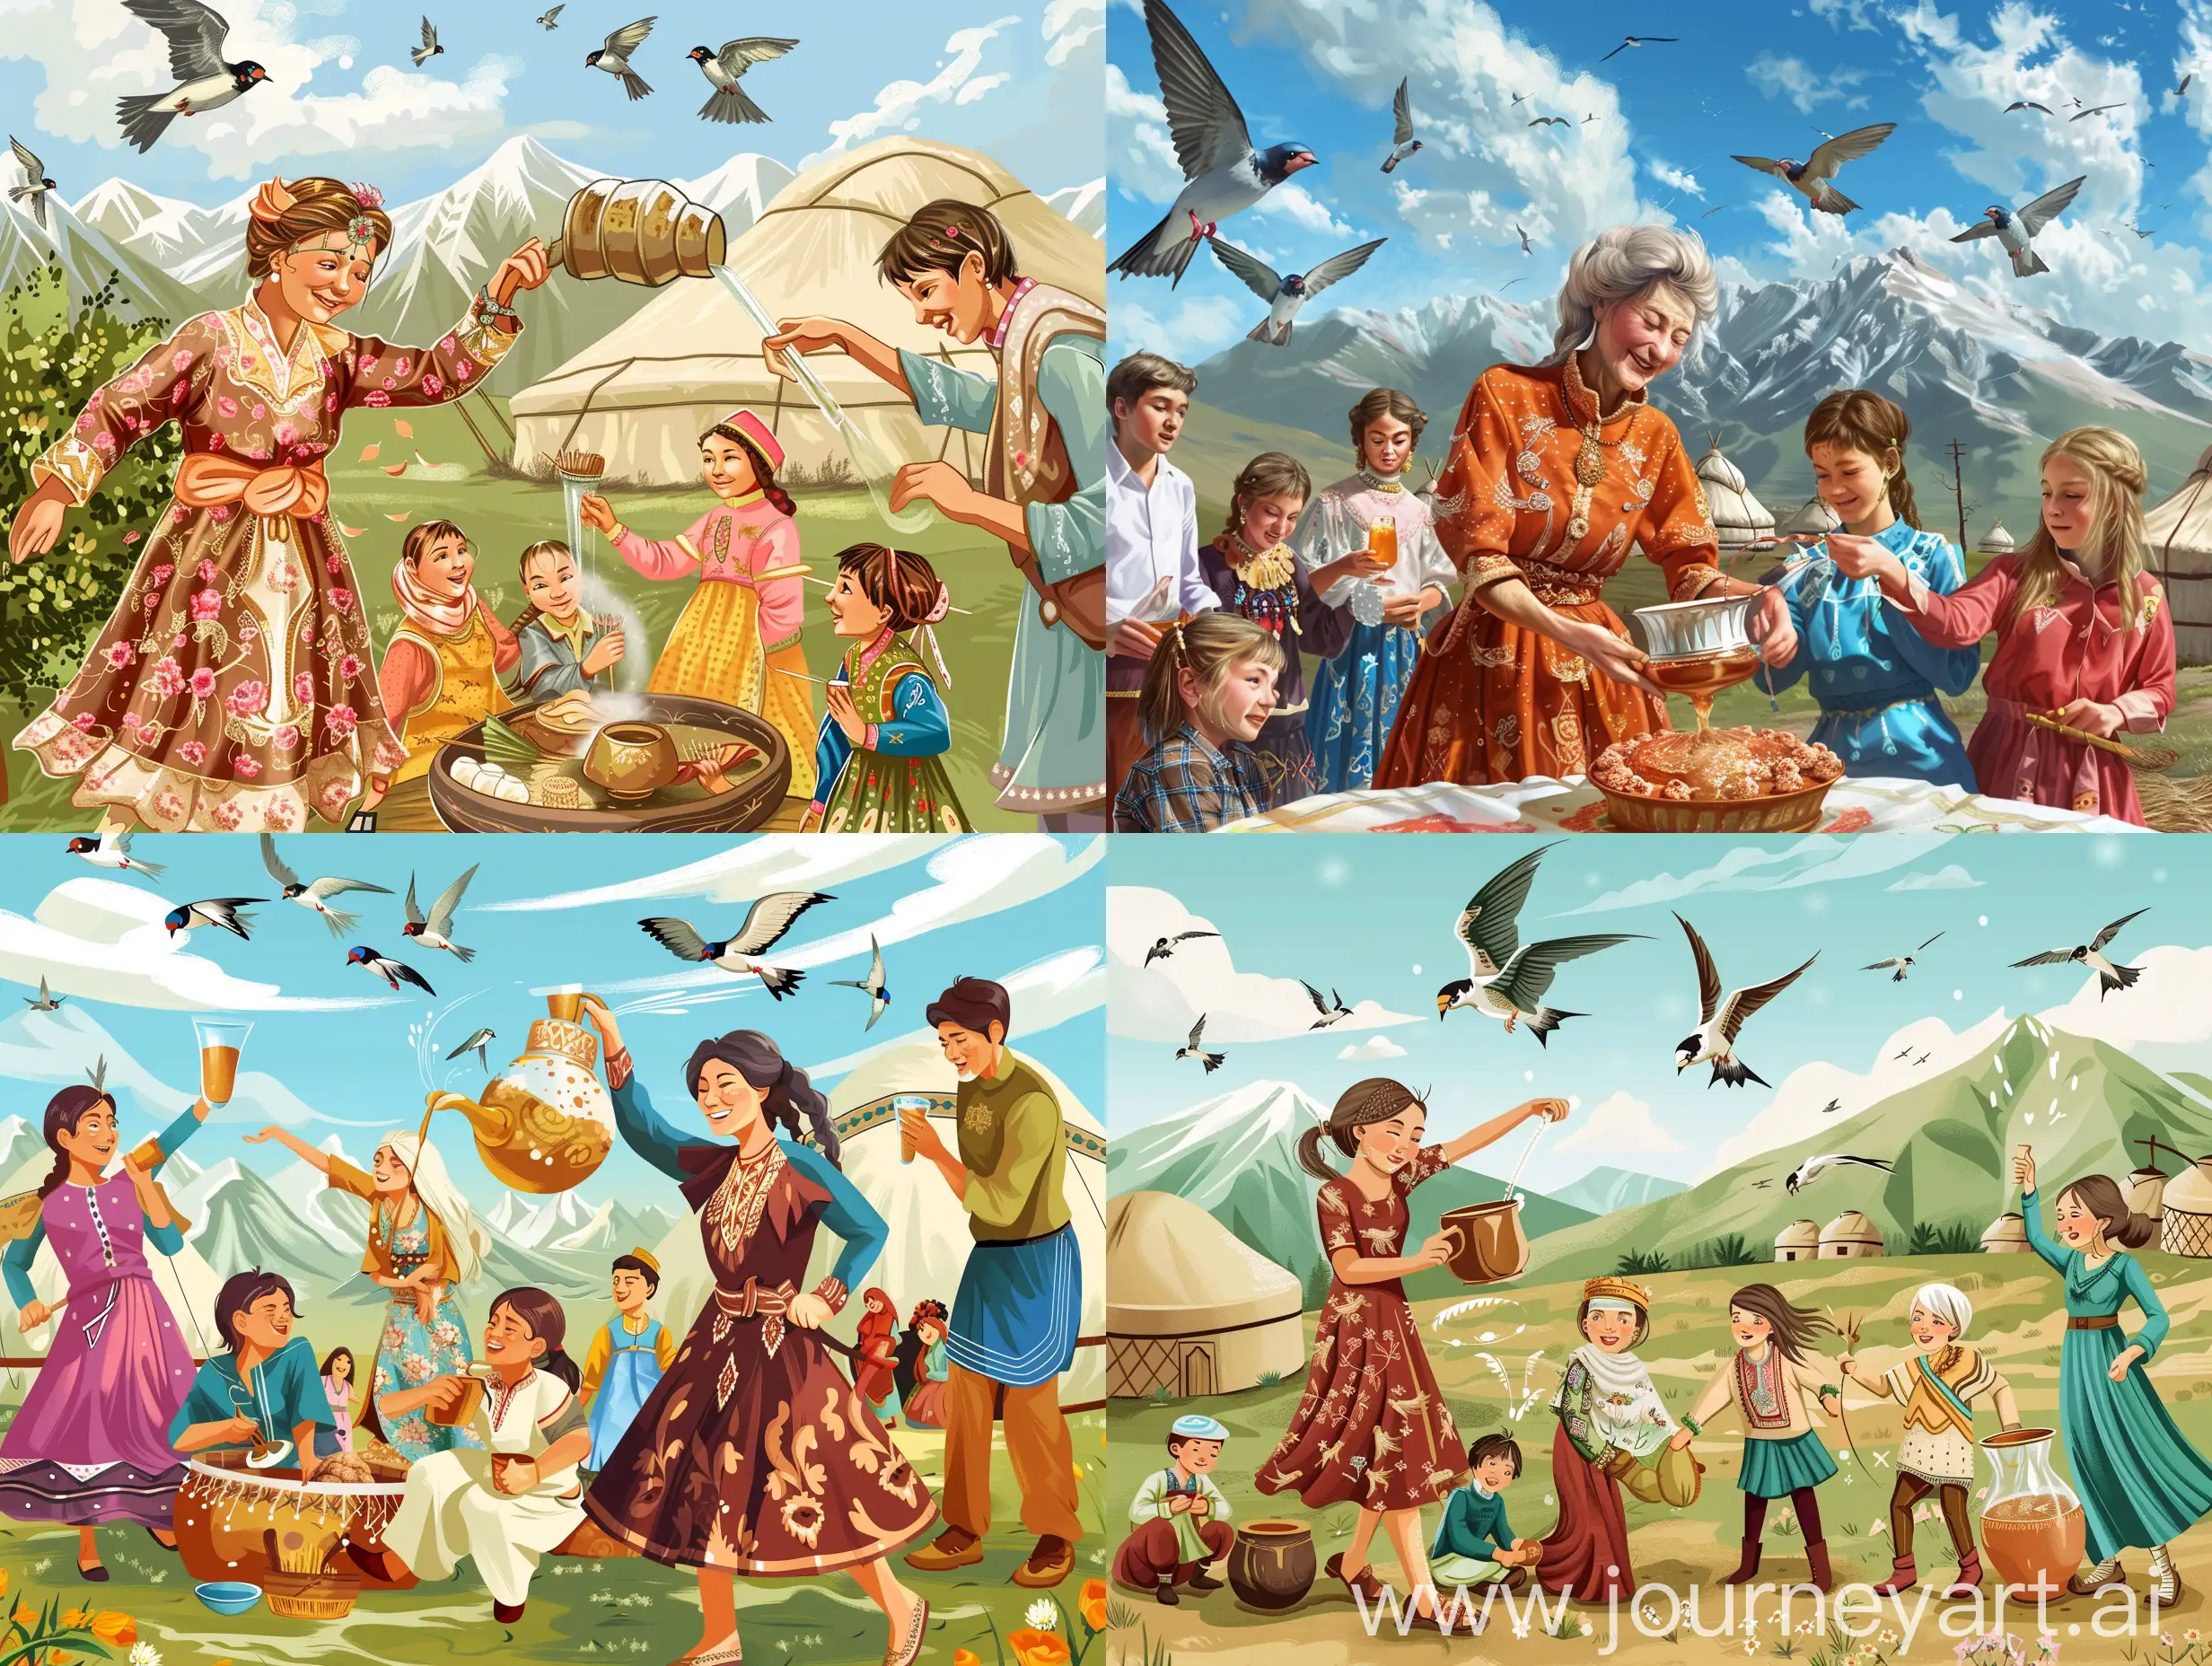 Nauryz-Celebration-in-Kazakhstan-Joyful-Spring-Gathering-with-Traditional-Customs